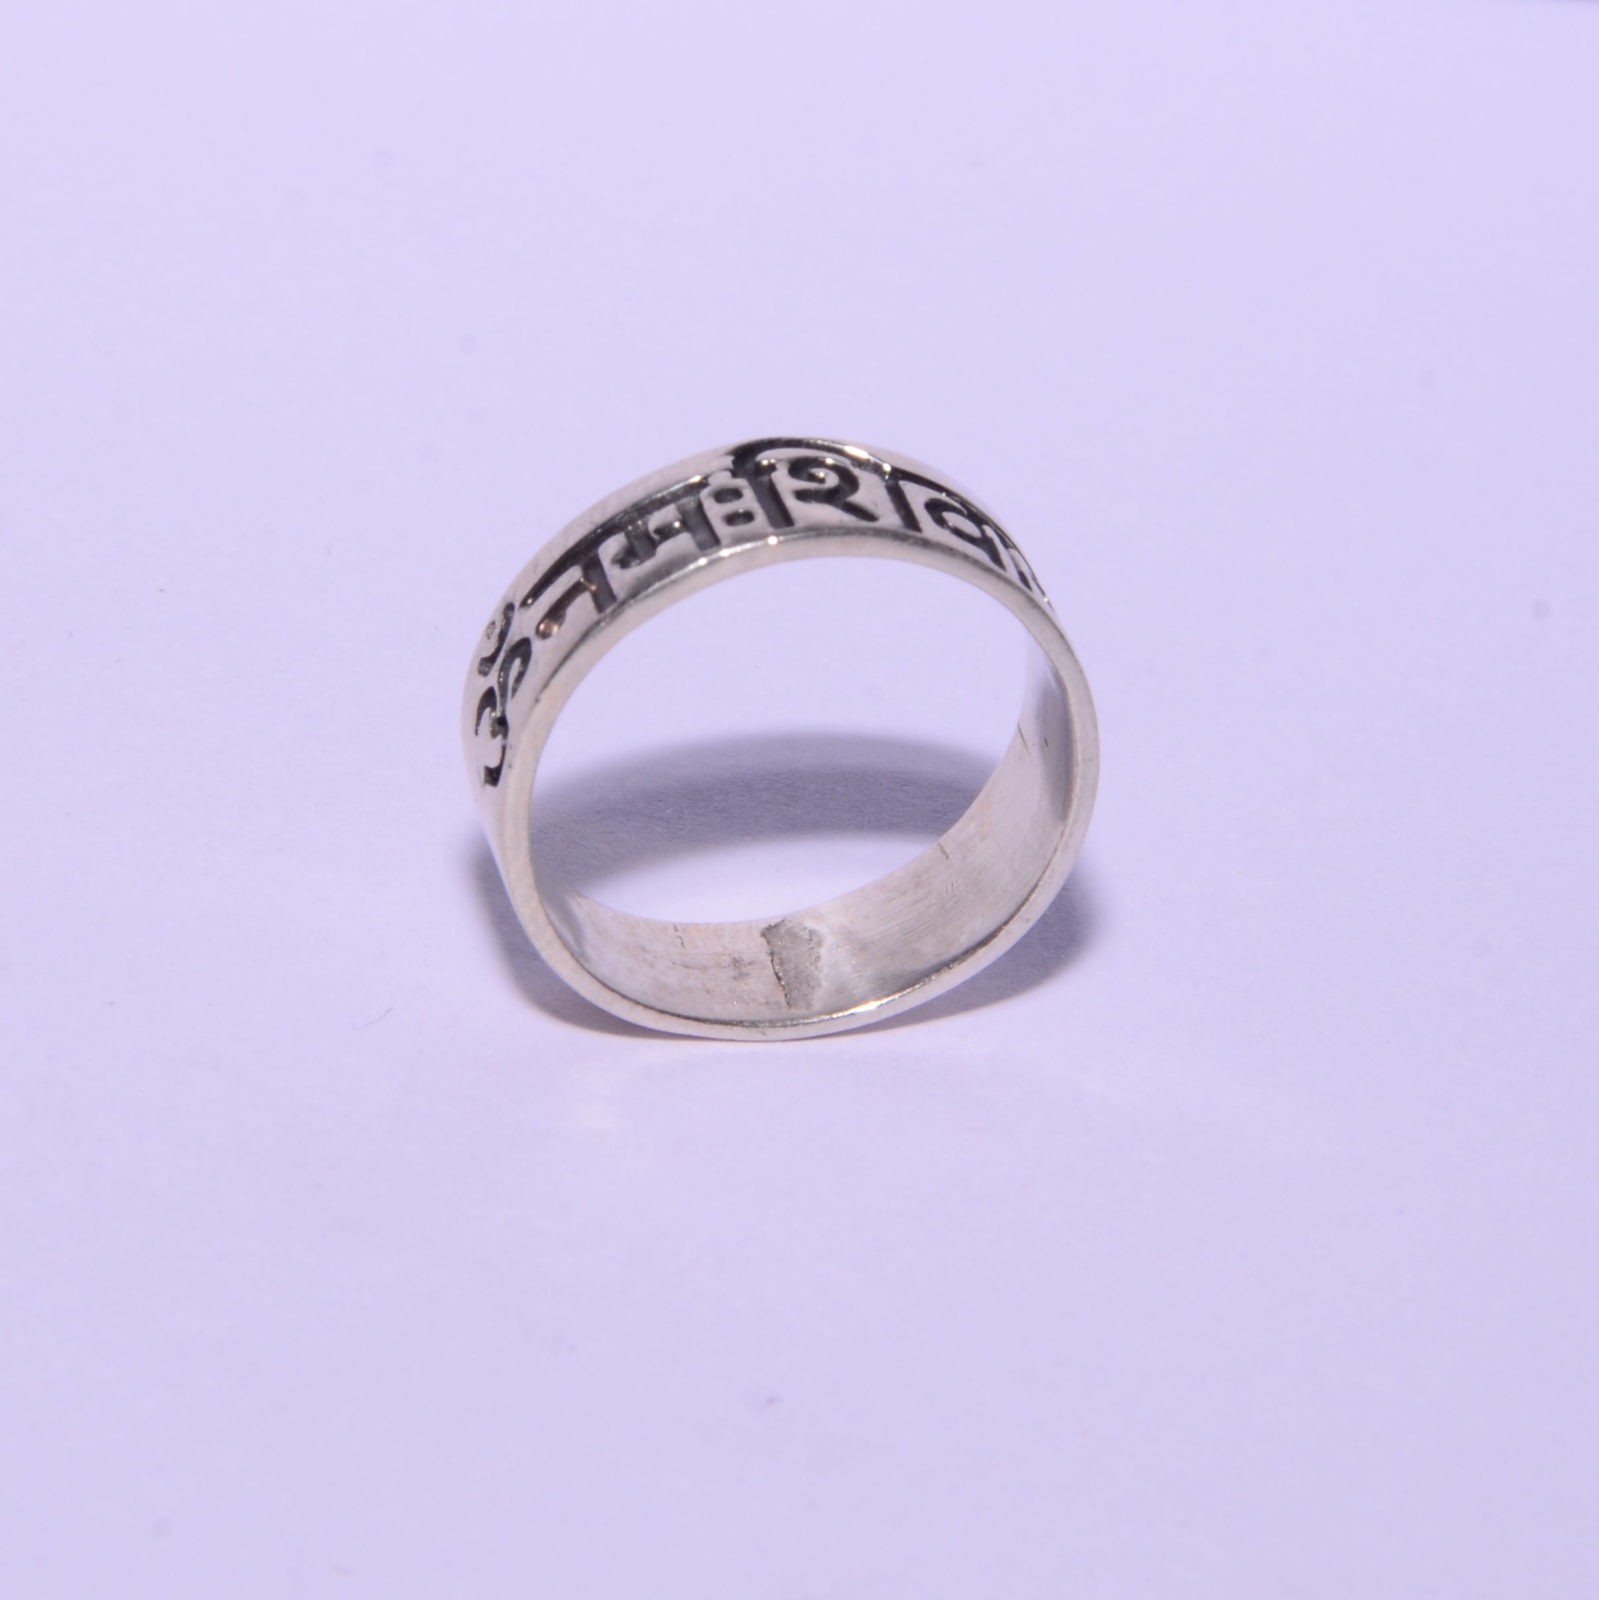 Personalised & engraved men's rings | Shop at Trendhim